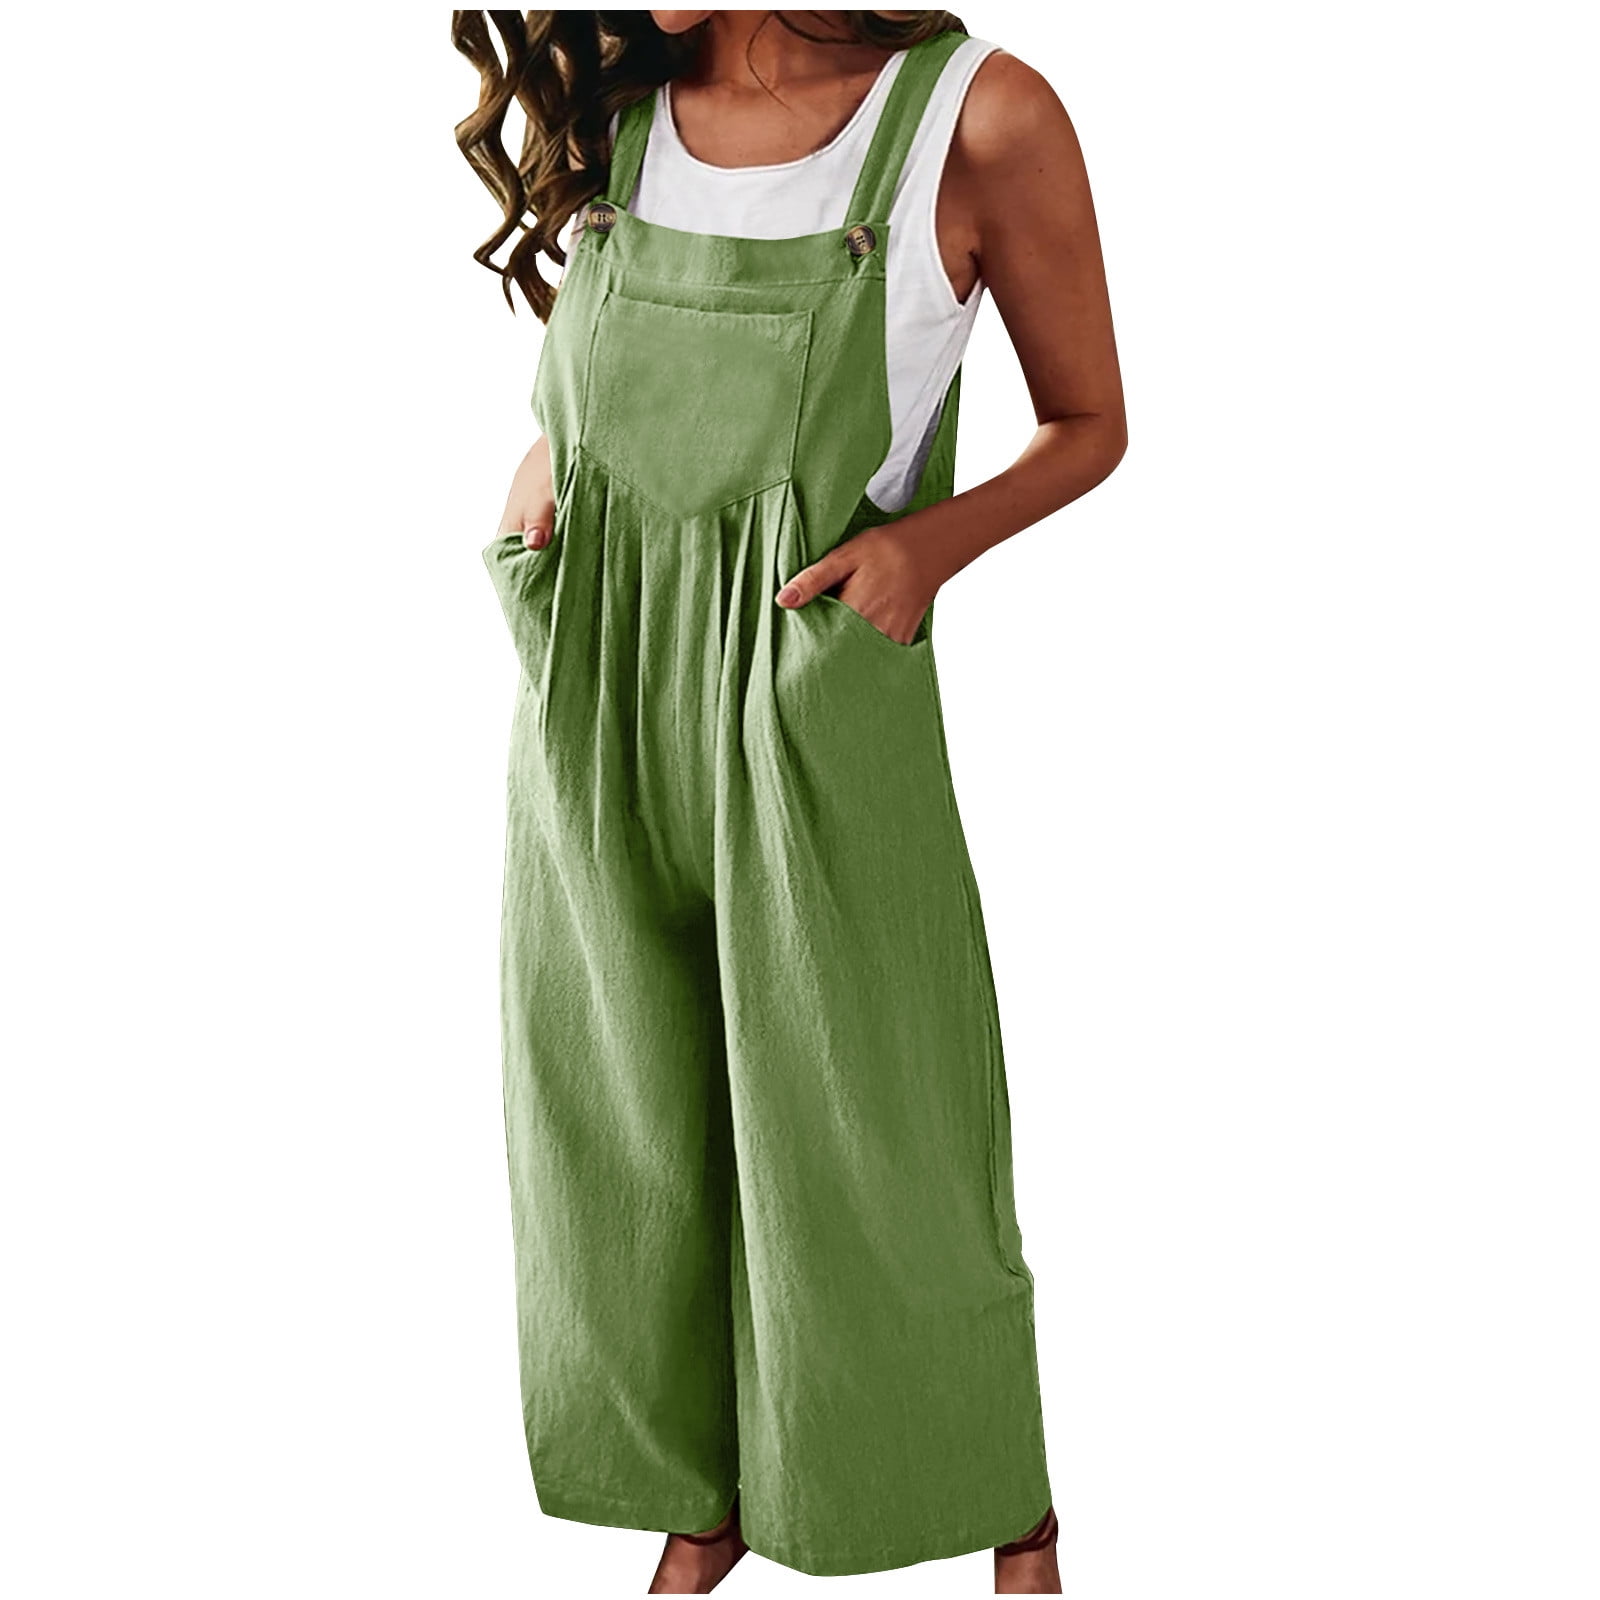 Zodggu Women's Linen Cotton Solid Color Sleeveless Pocket